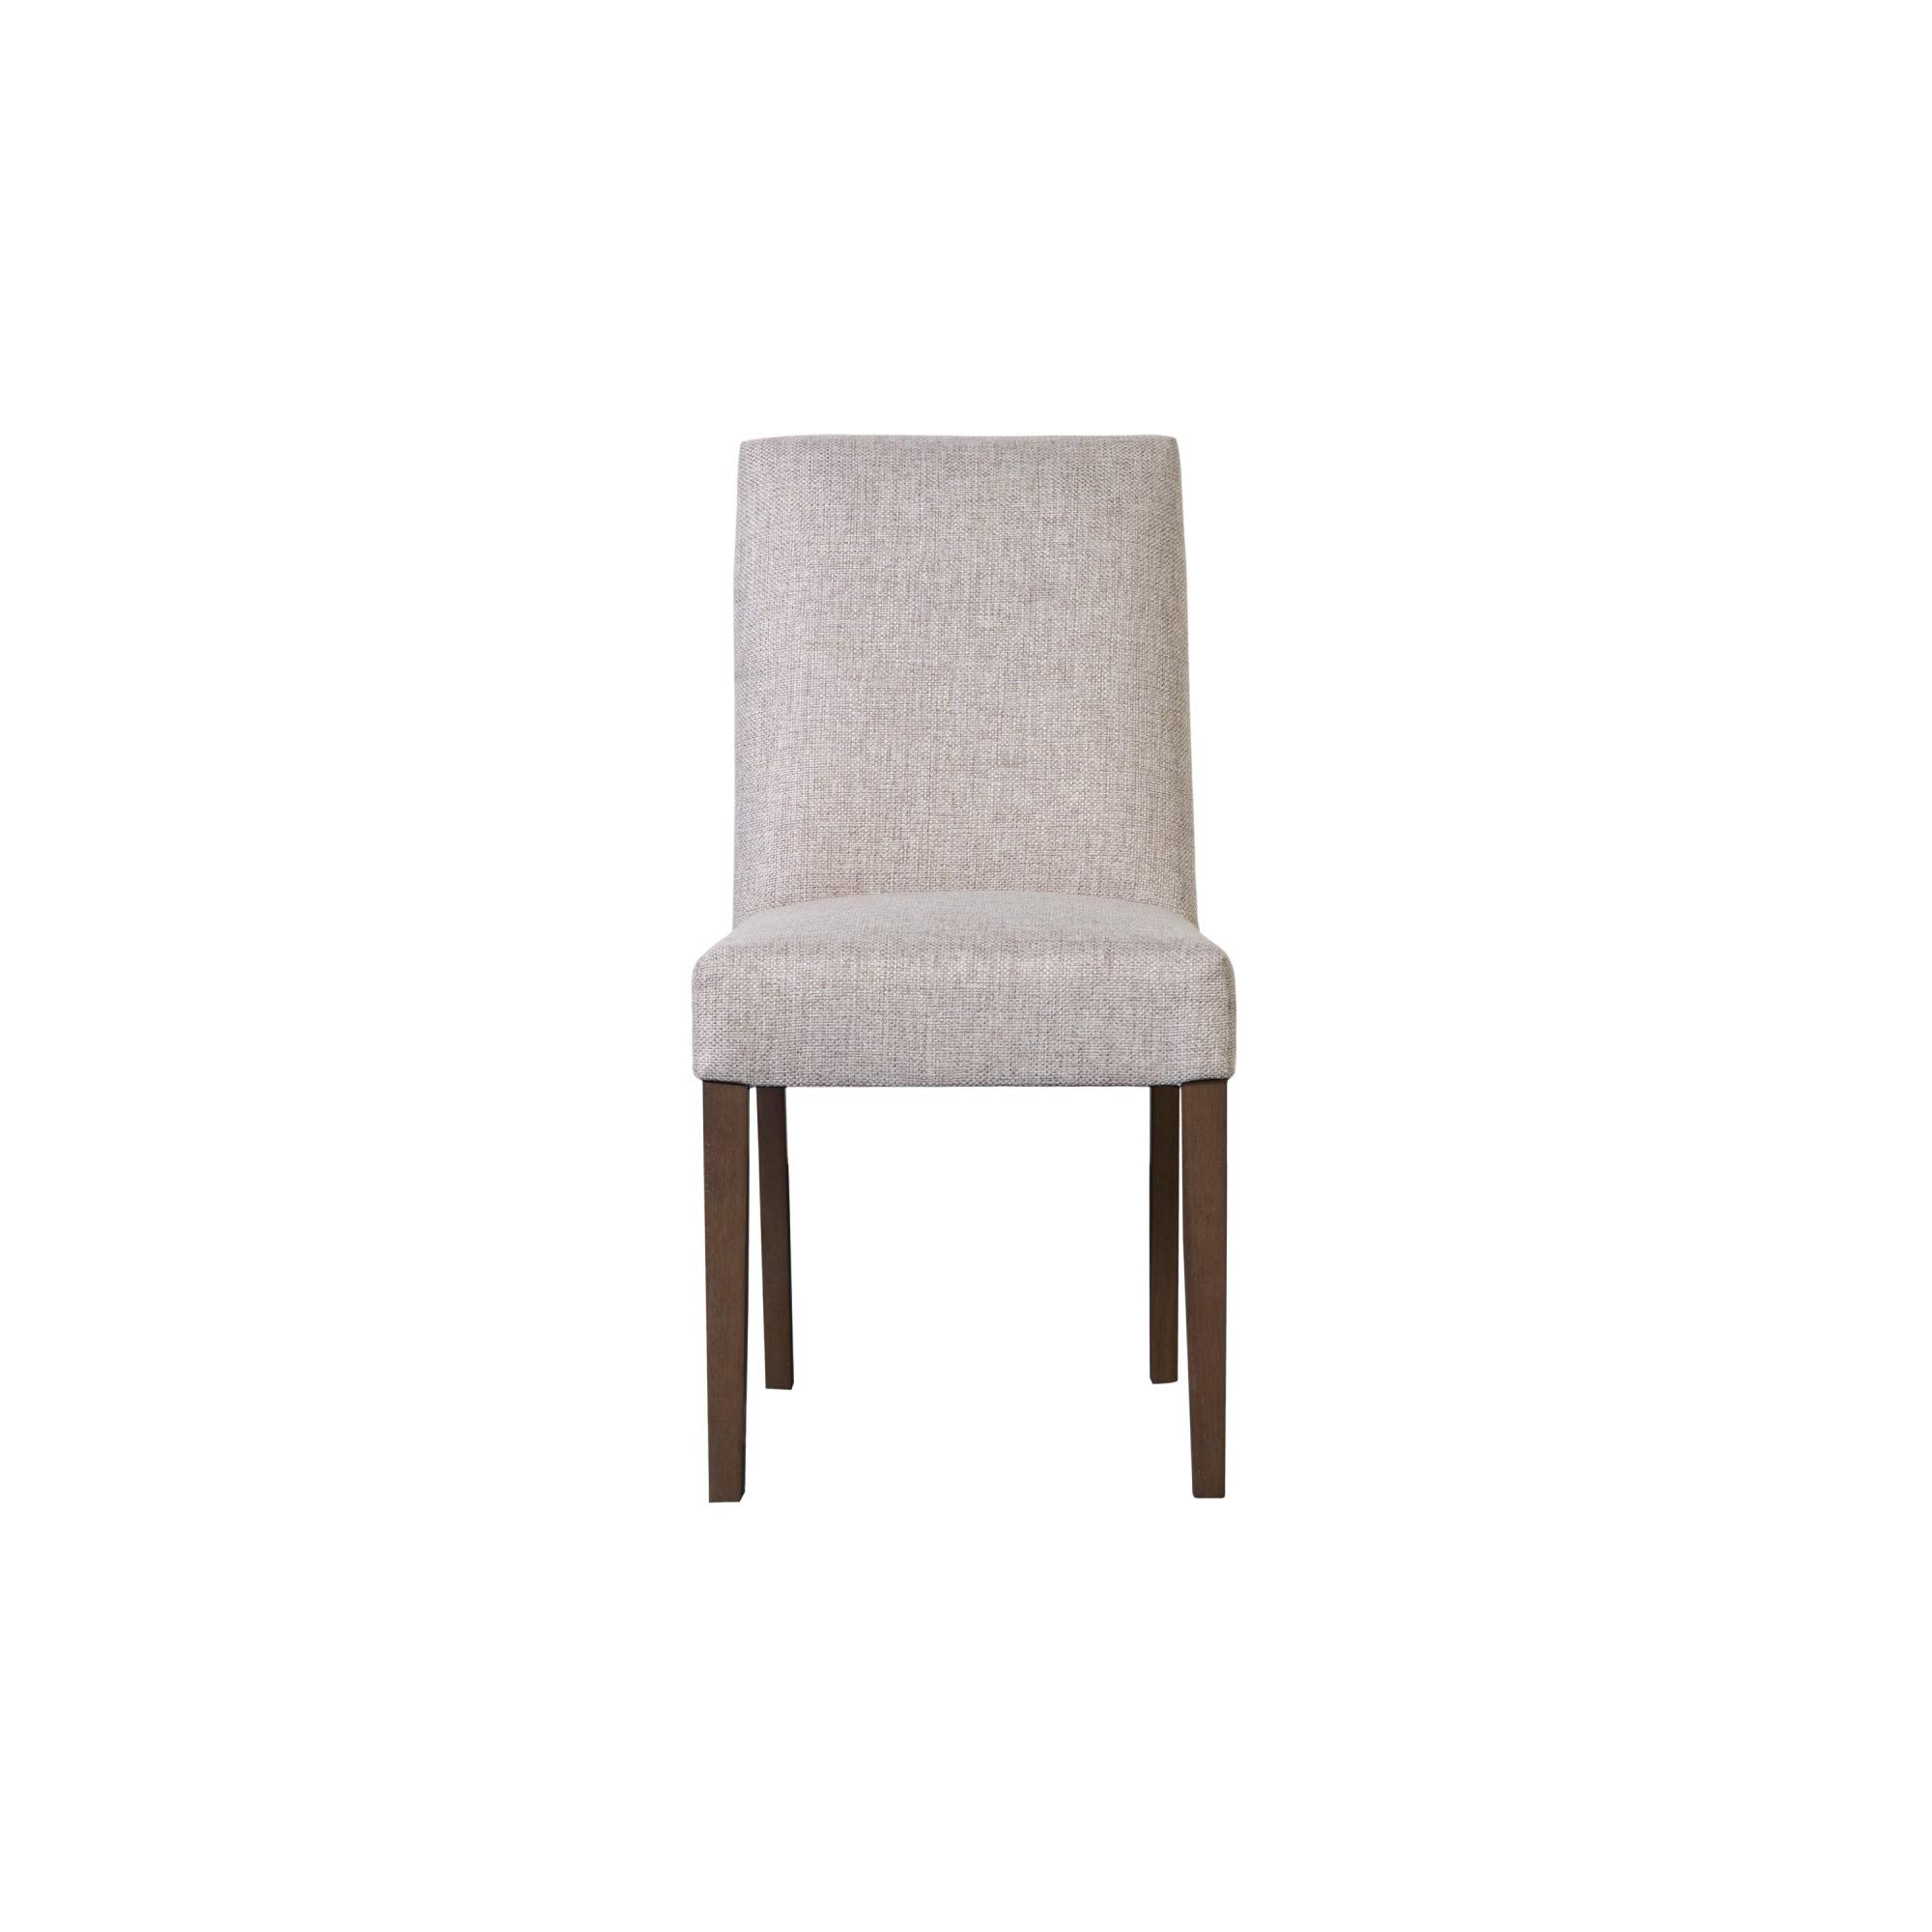 Porter Designs Enna Dining Chair, Regular, Cream